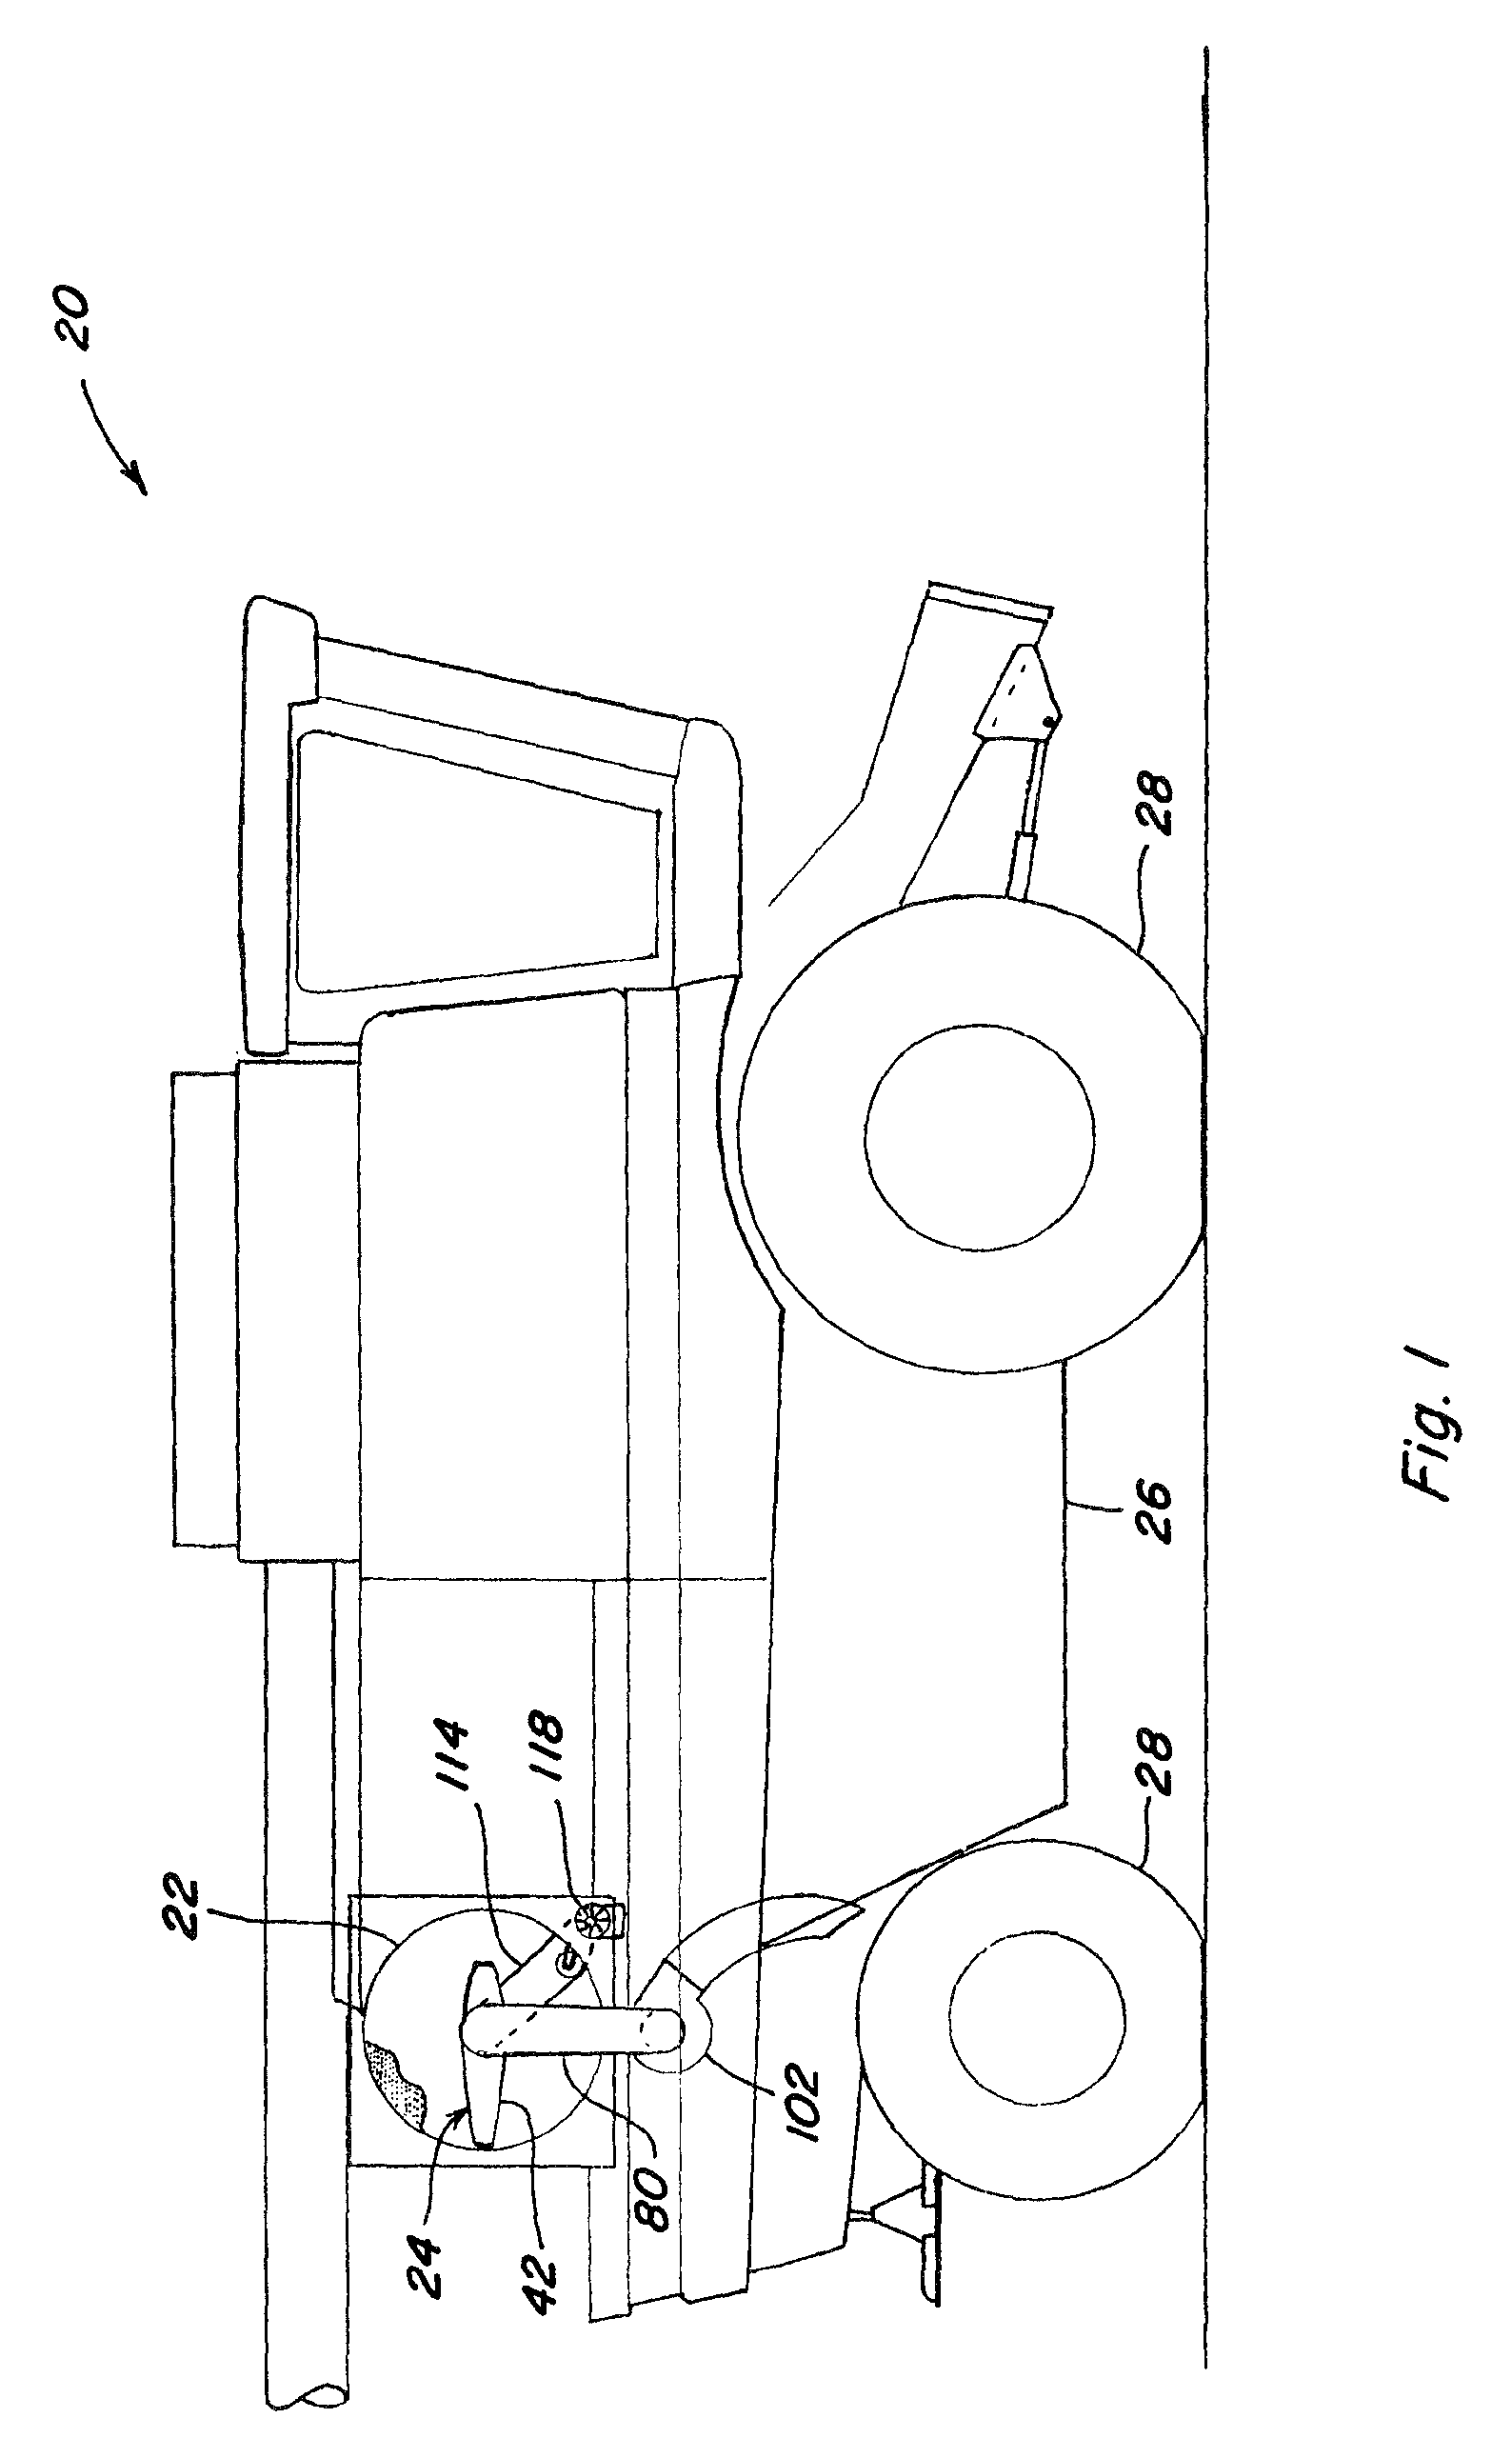 Rotary vacuum apparatus for air screen